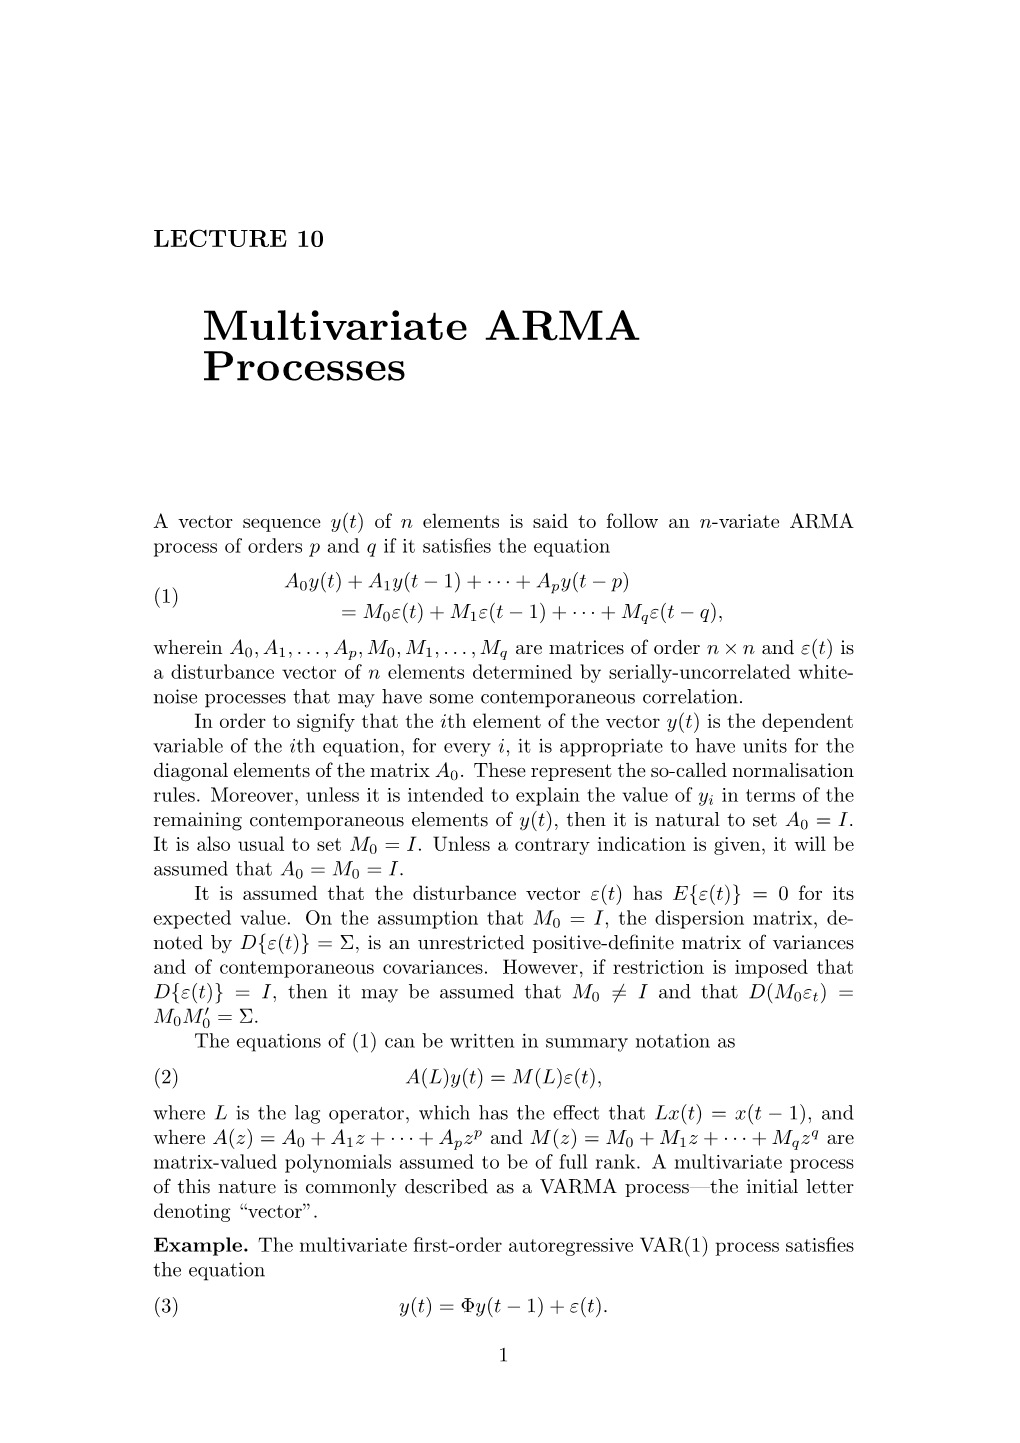 Multivariate ARMA Processes